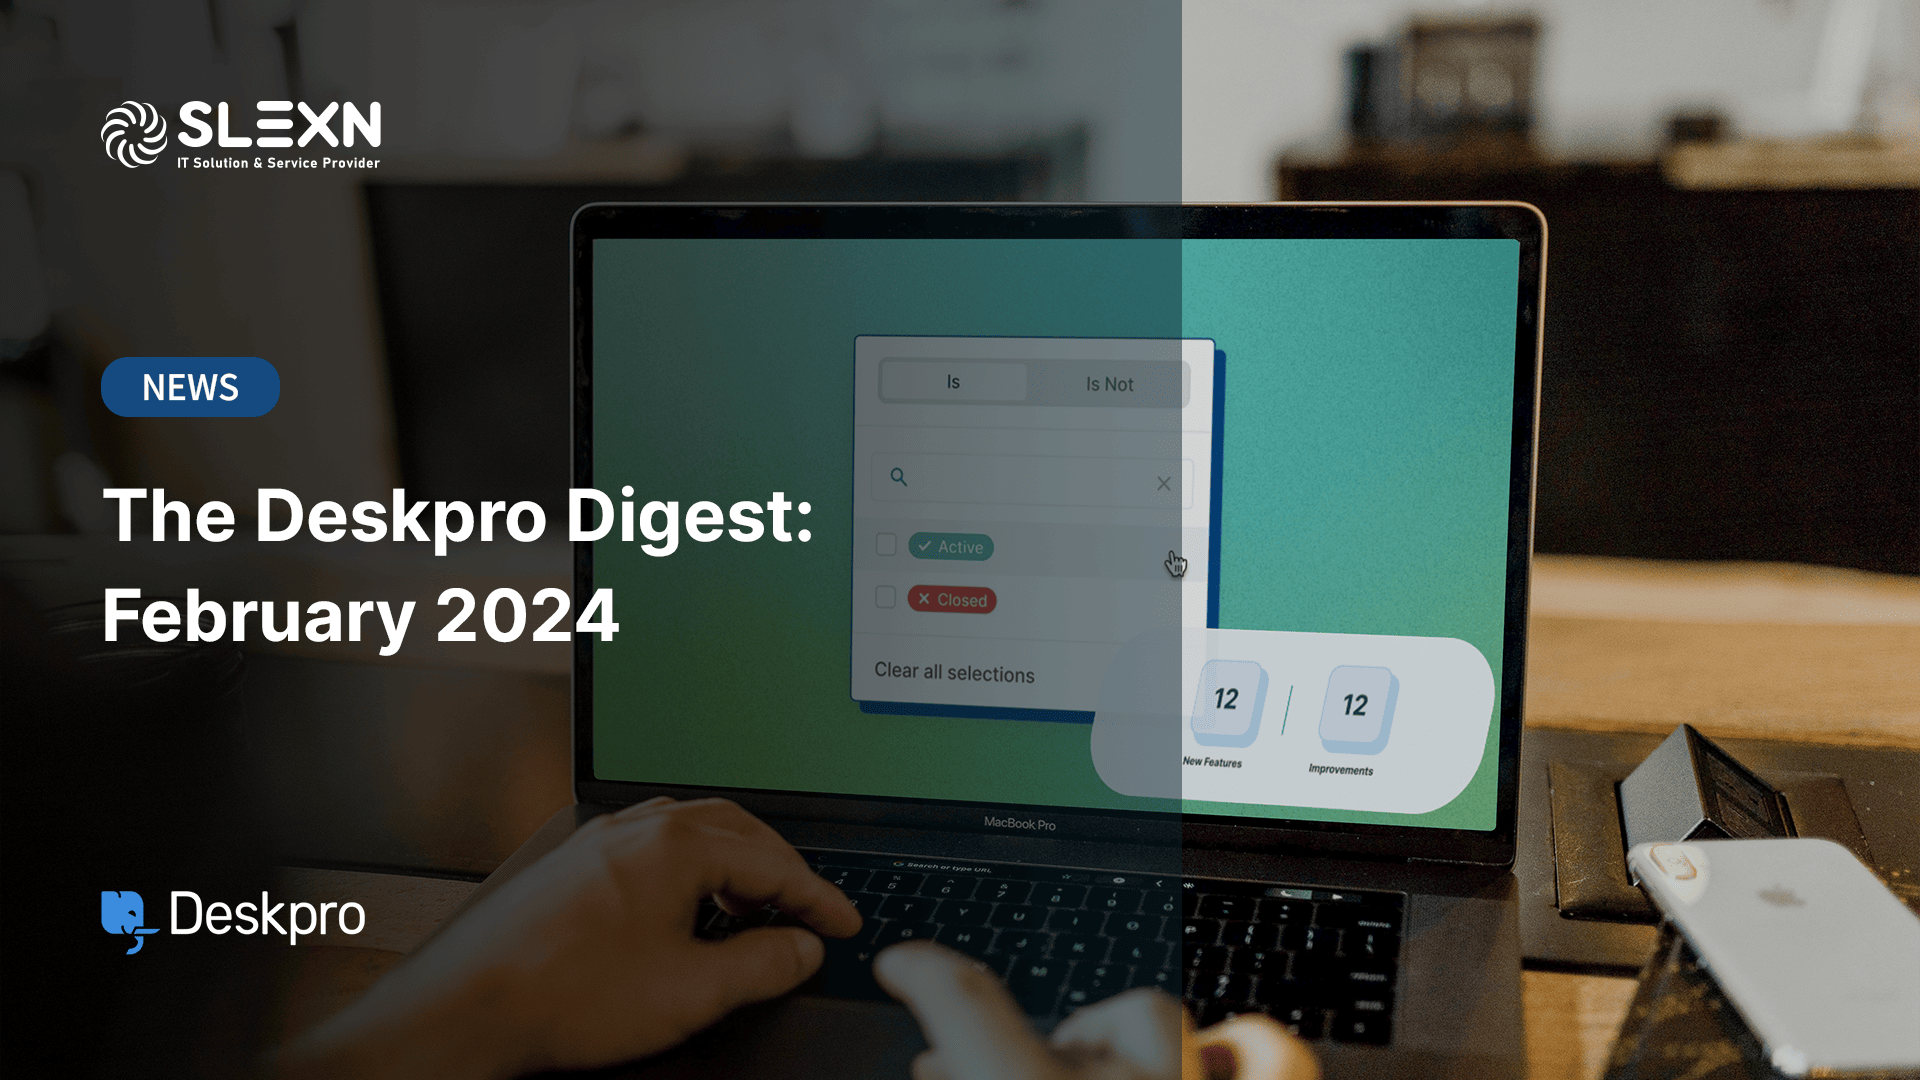 The Deskpro Digest: February 2024